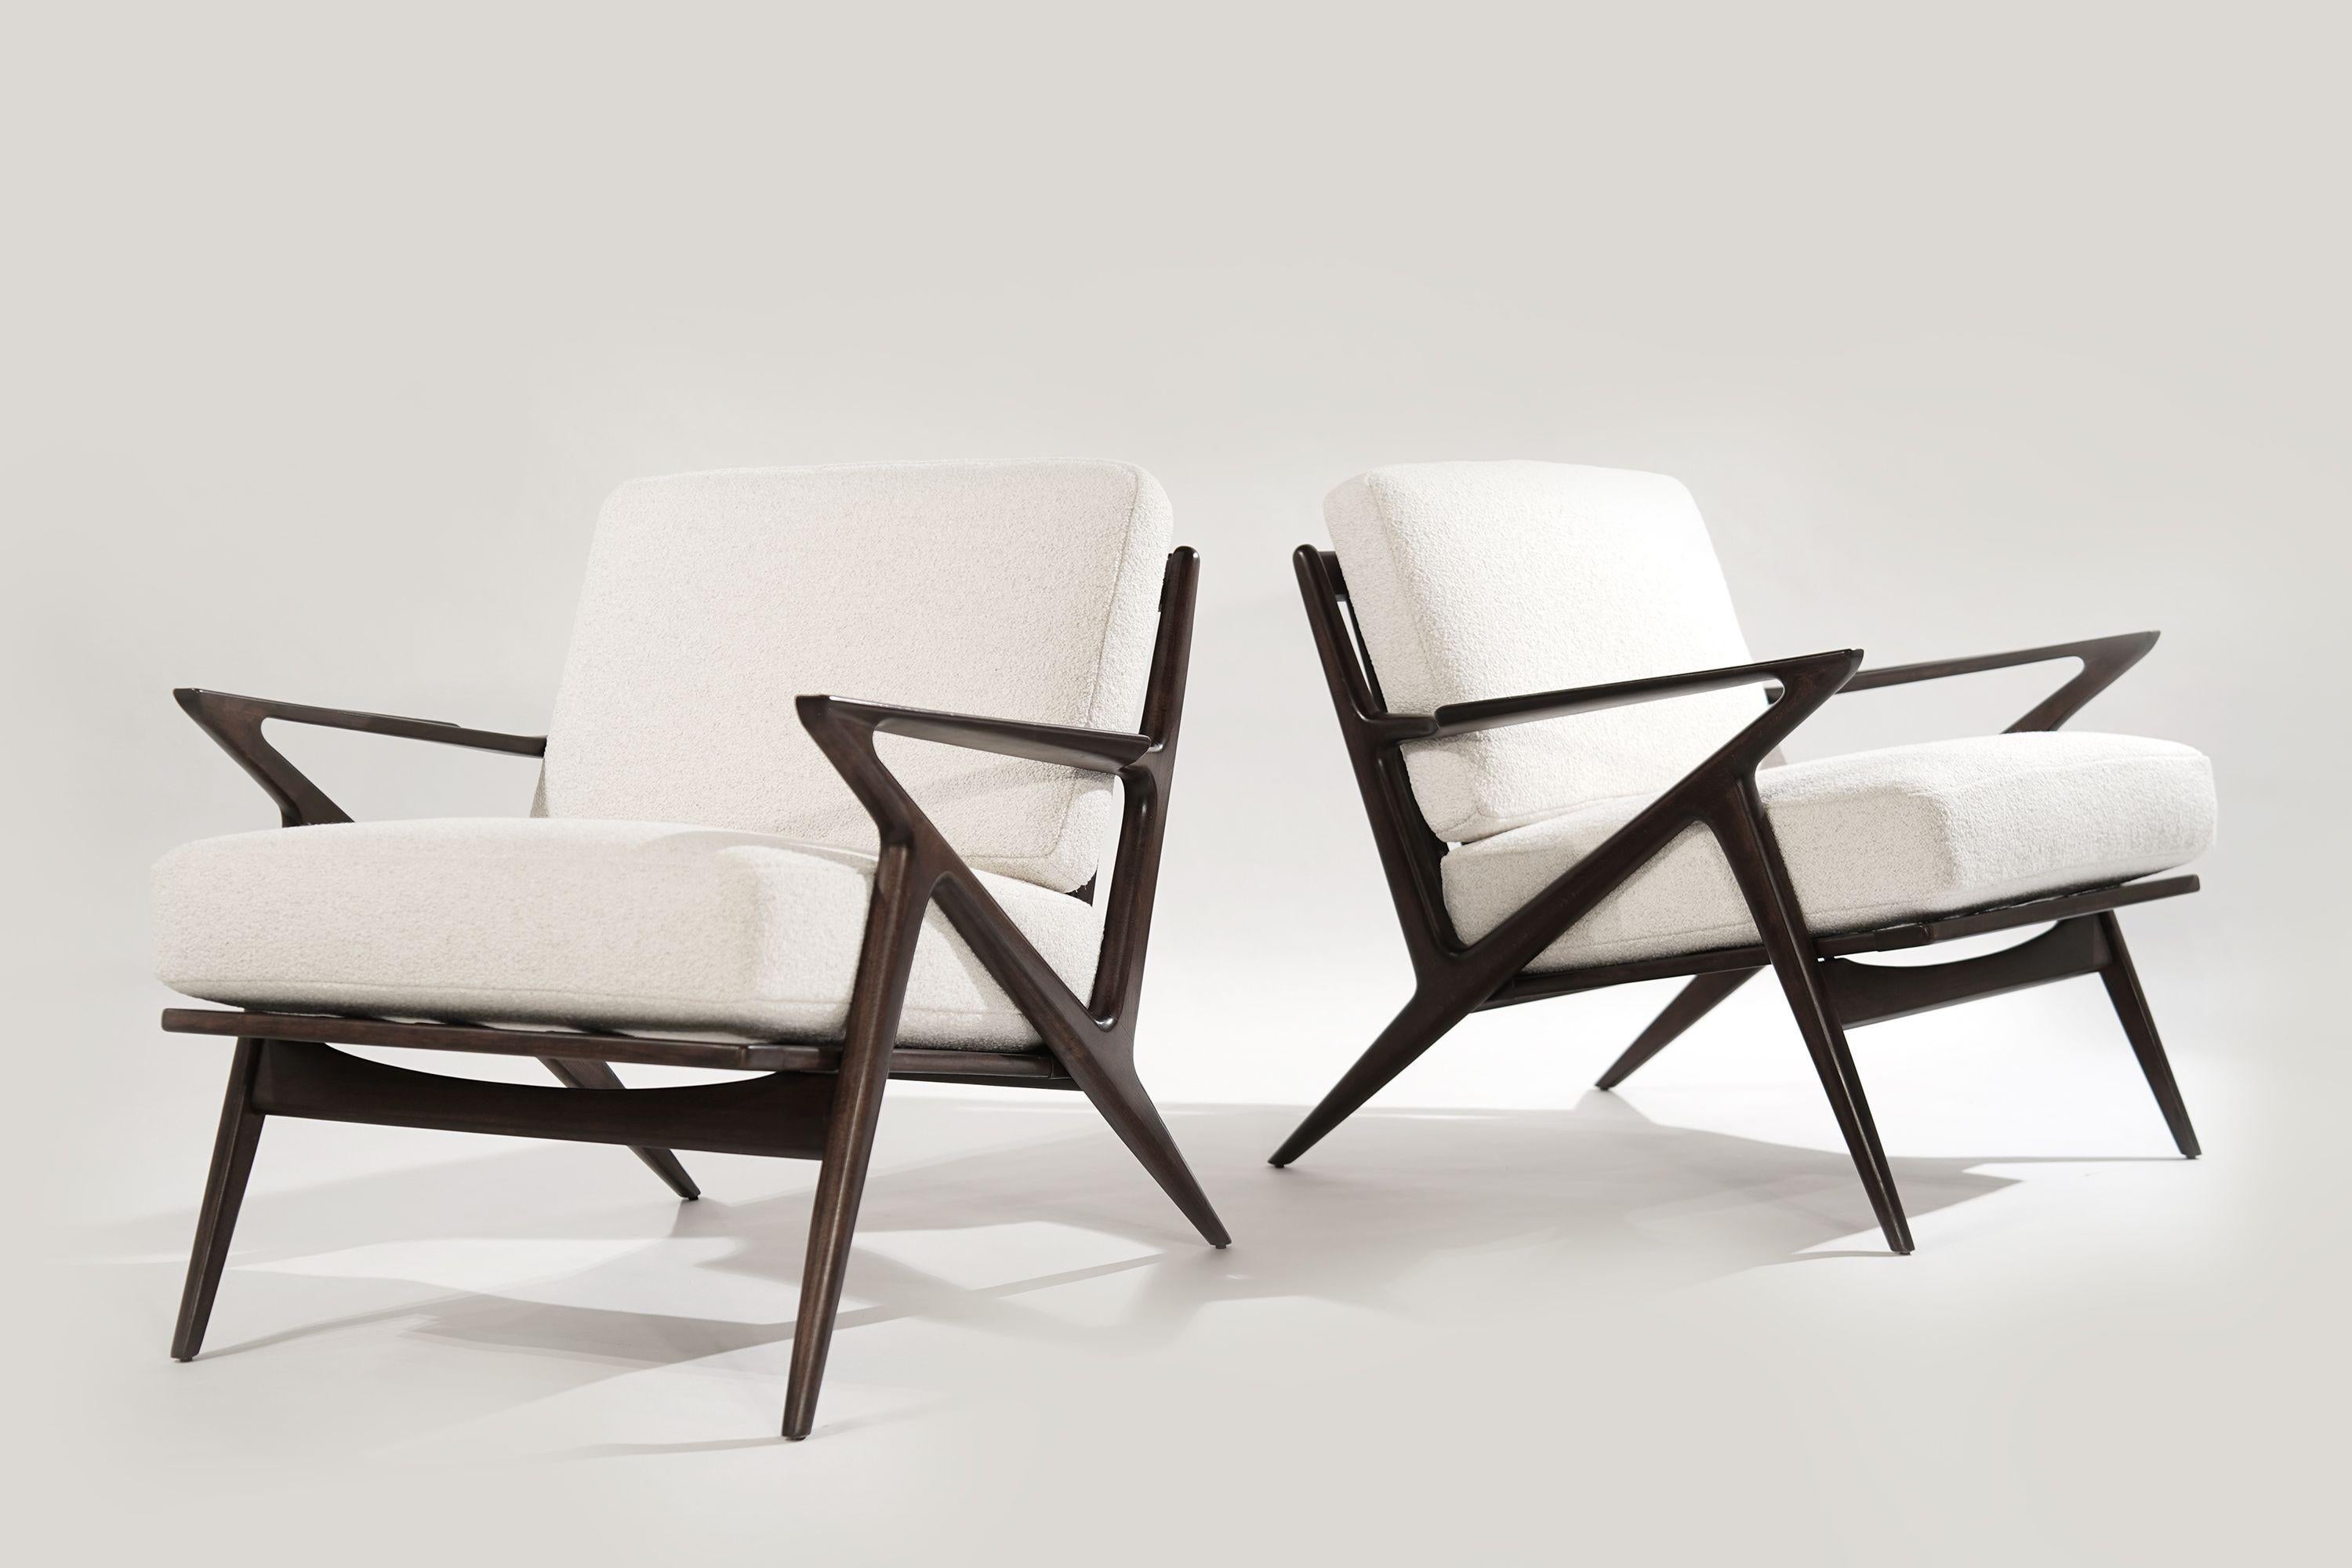 20th Century Scandinavian Modern Lounge Chairs by Poul Jensen